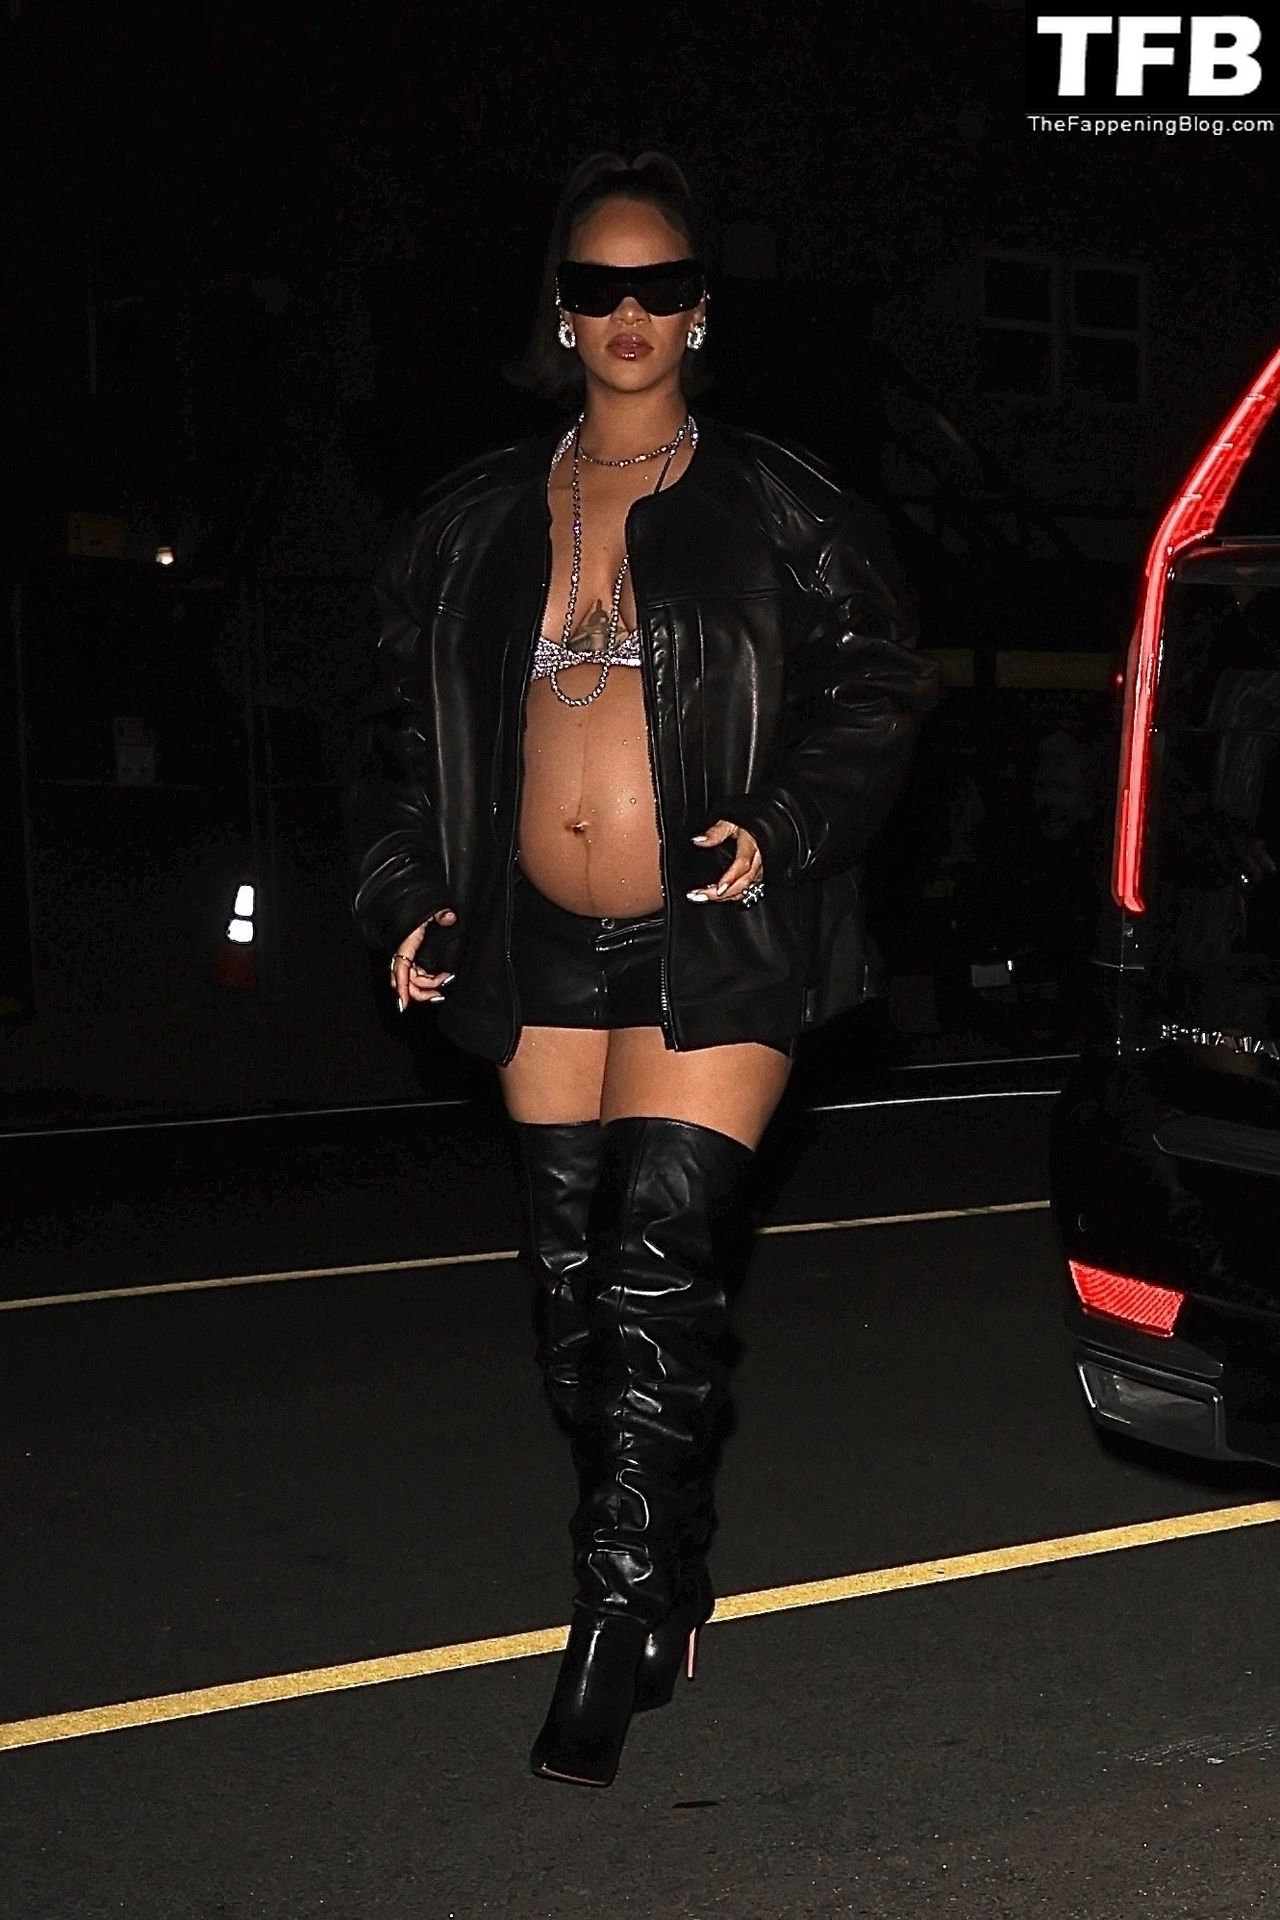 Rihanna-Sexy-The-Fappening-Blog-2-3.jpg